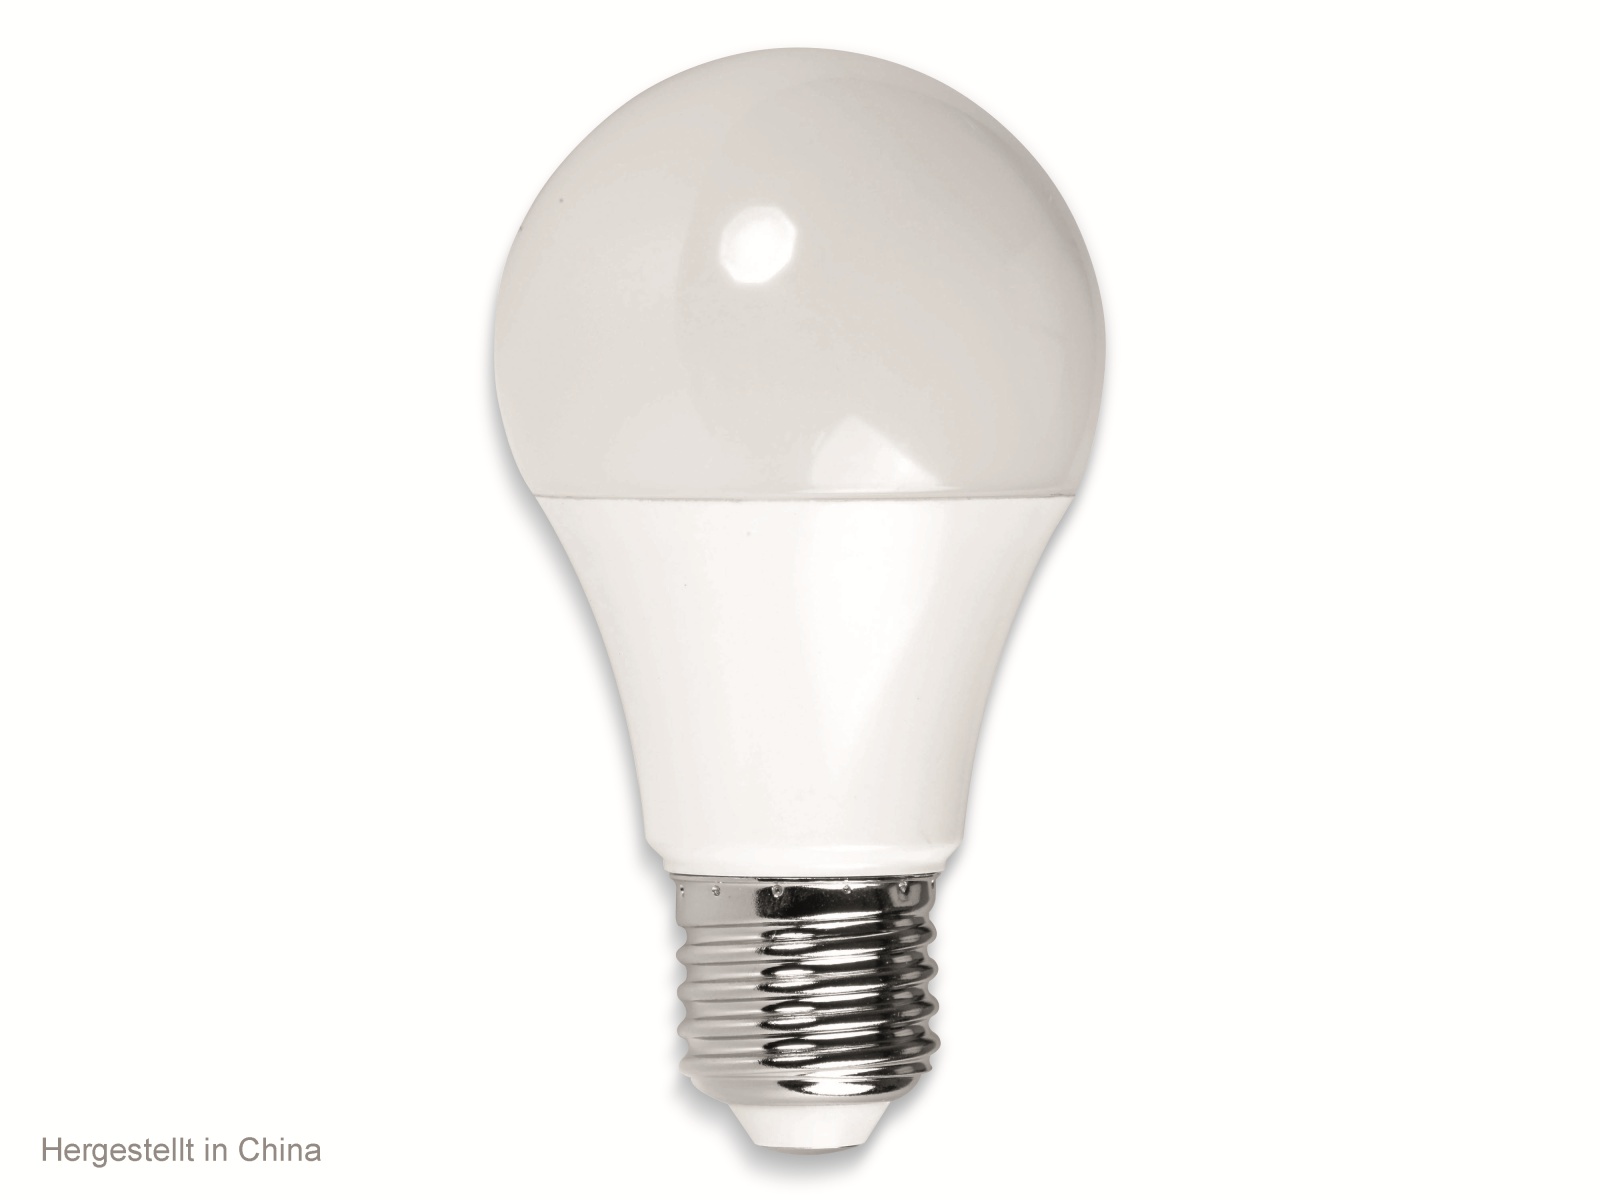 swisstone LED-Lampe SH 340, WLAN, E27, 9 W, EEK: A+, 806 lm, RGB, dimmbar